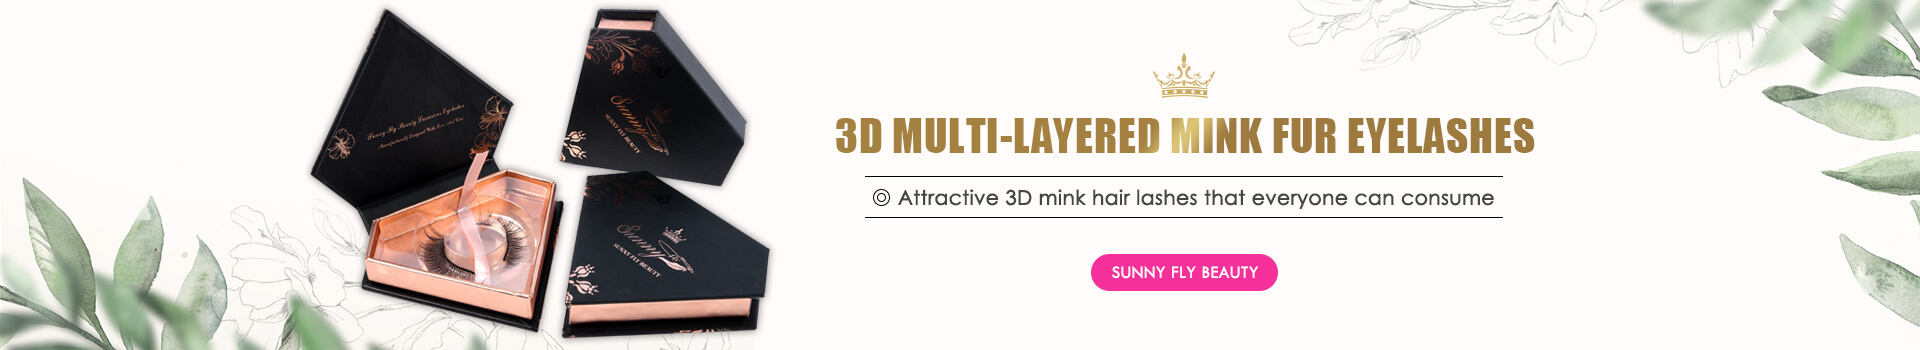 3D Multi-layered Mink Fur Eyelashes MG08